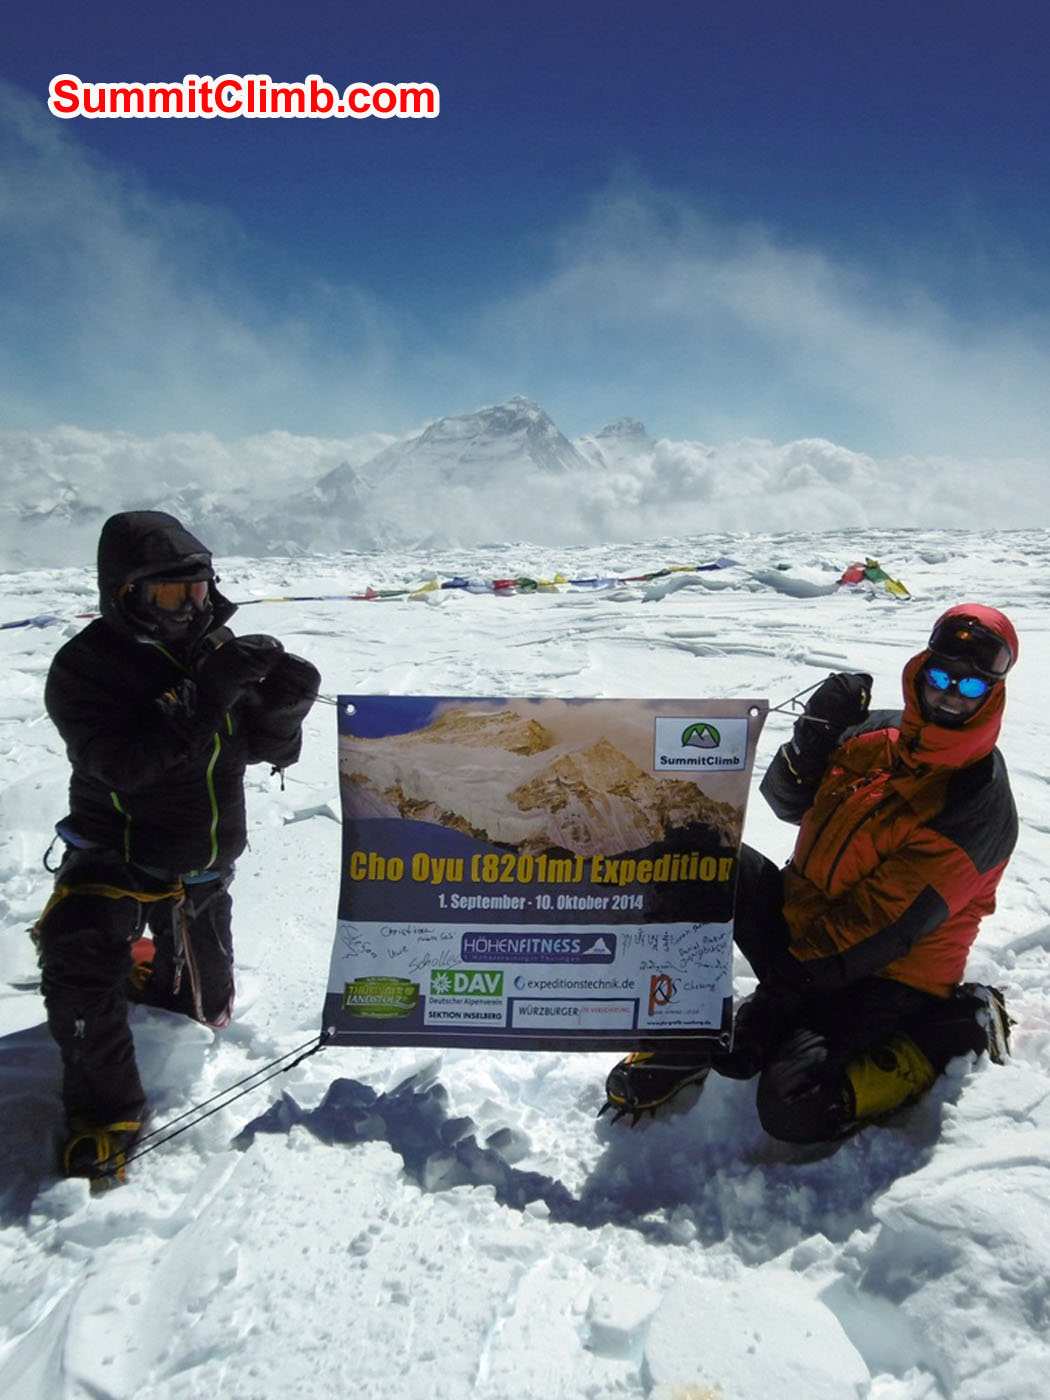 Thomas and Stefan on the summit of Cho Oyu. Uwe Werner Photo